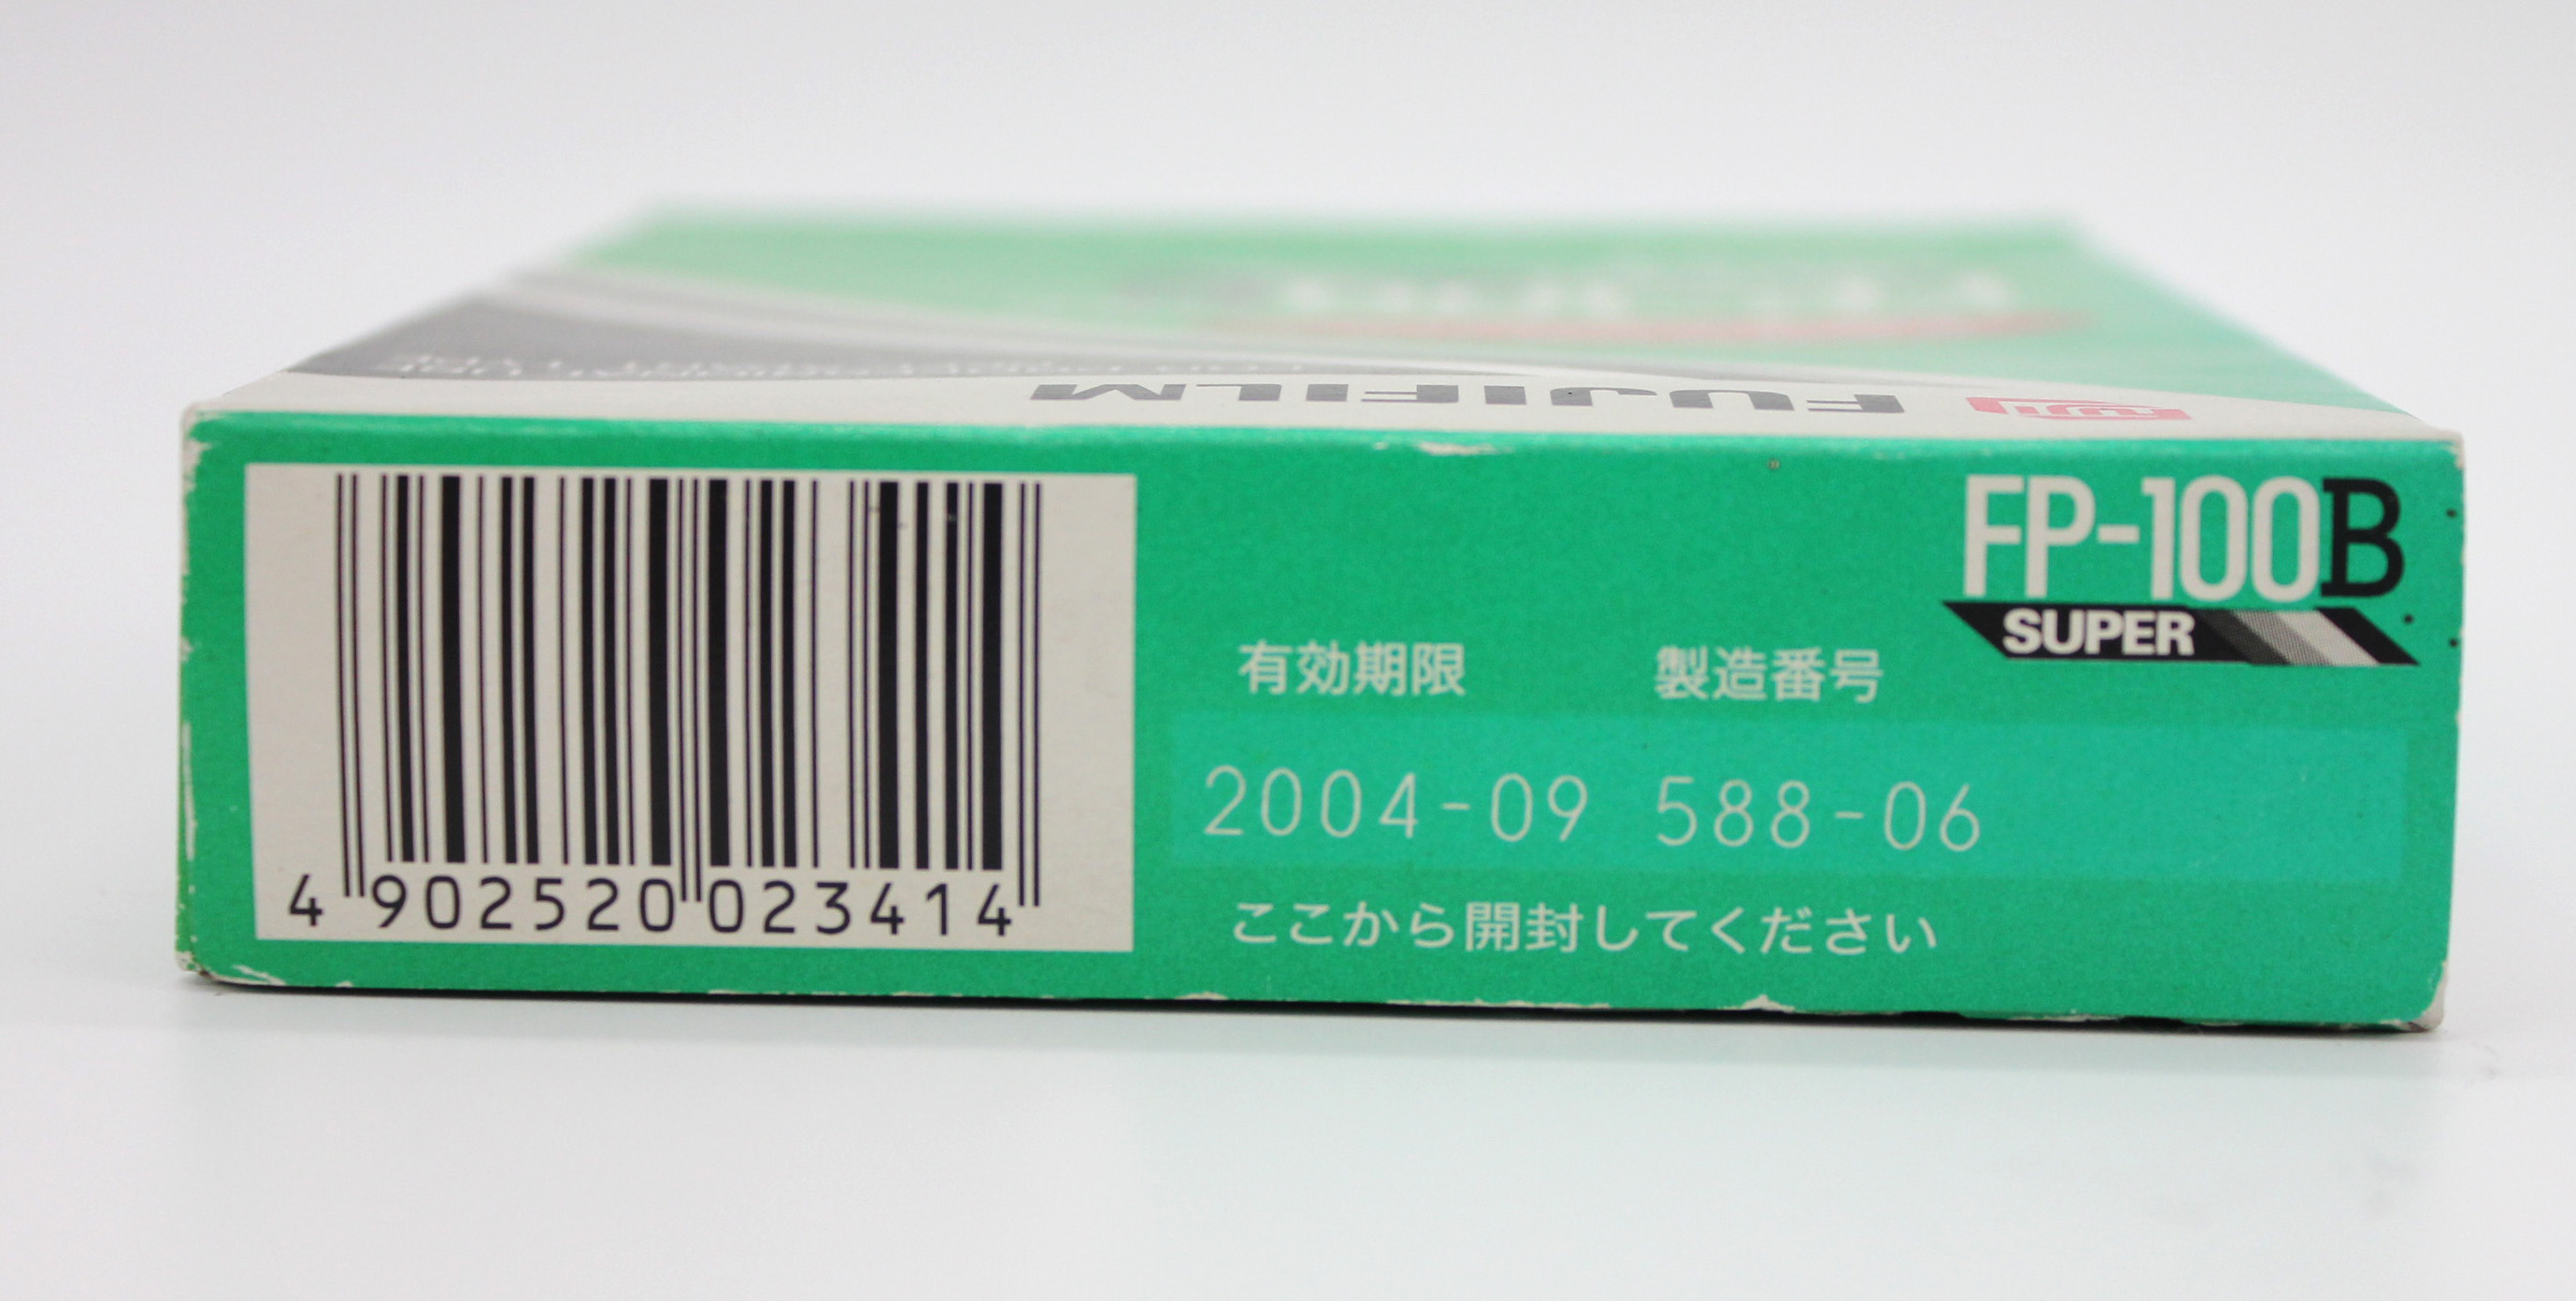  Fujifilm FP-100B Instant Black & White Film (Expired 09/2004) from Japan Photo 2